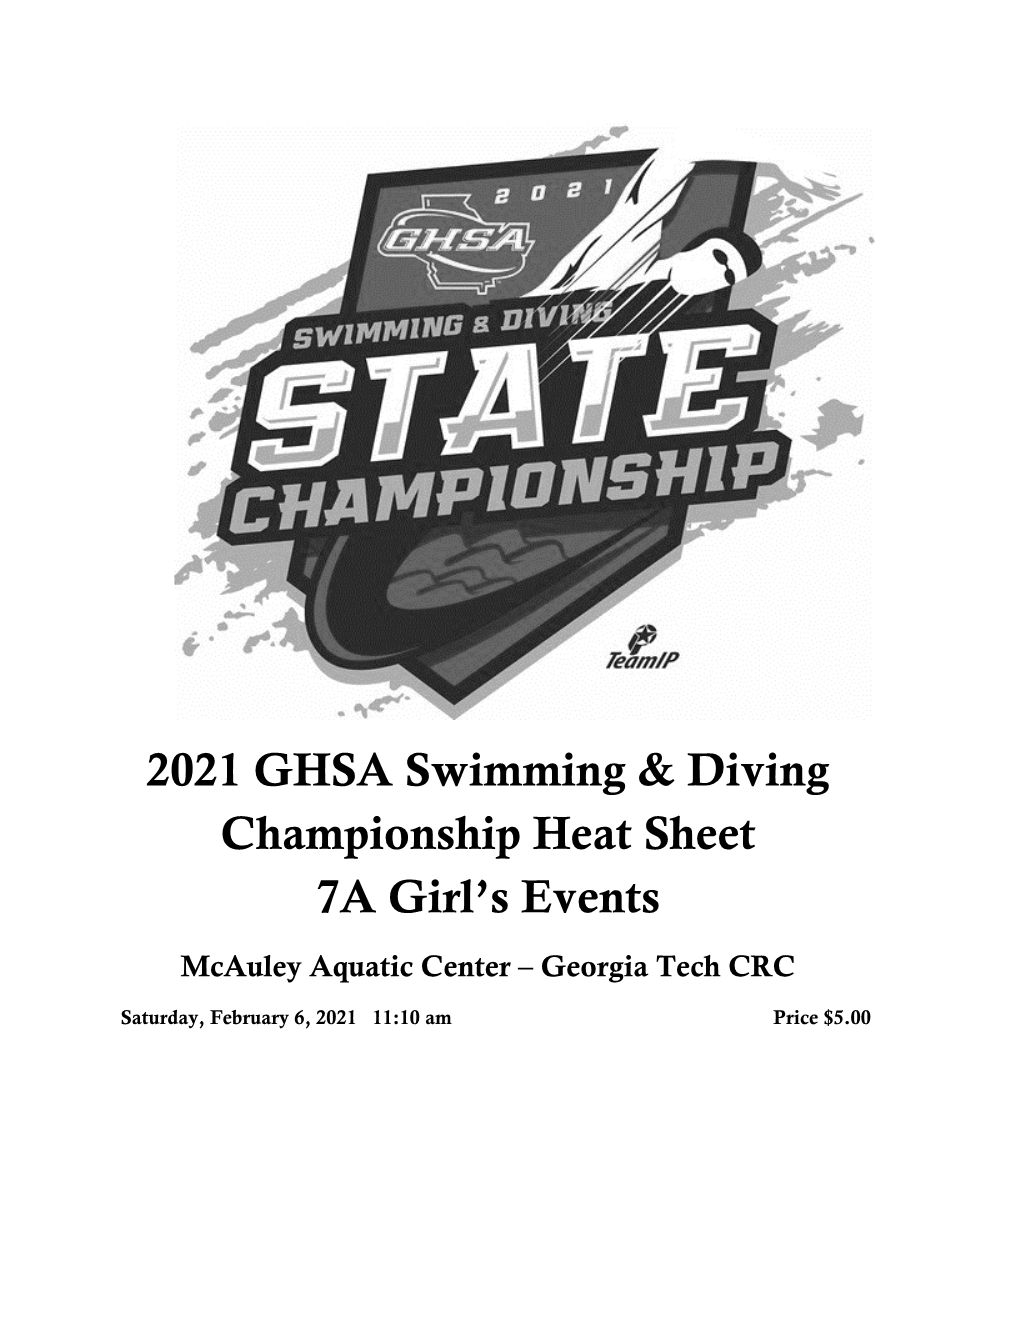 2021 GHSA Swimming & Diving Championship Heat Sheet 7A Girl's